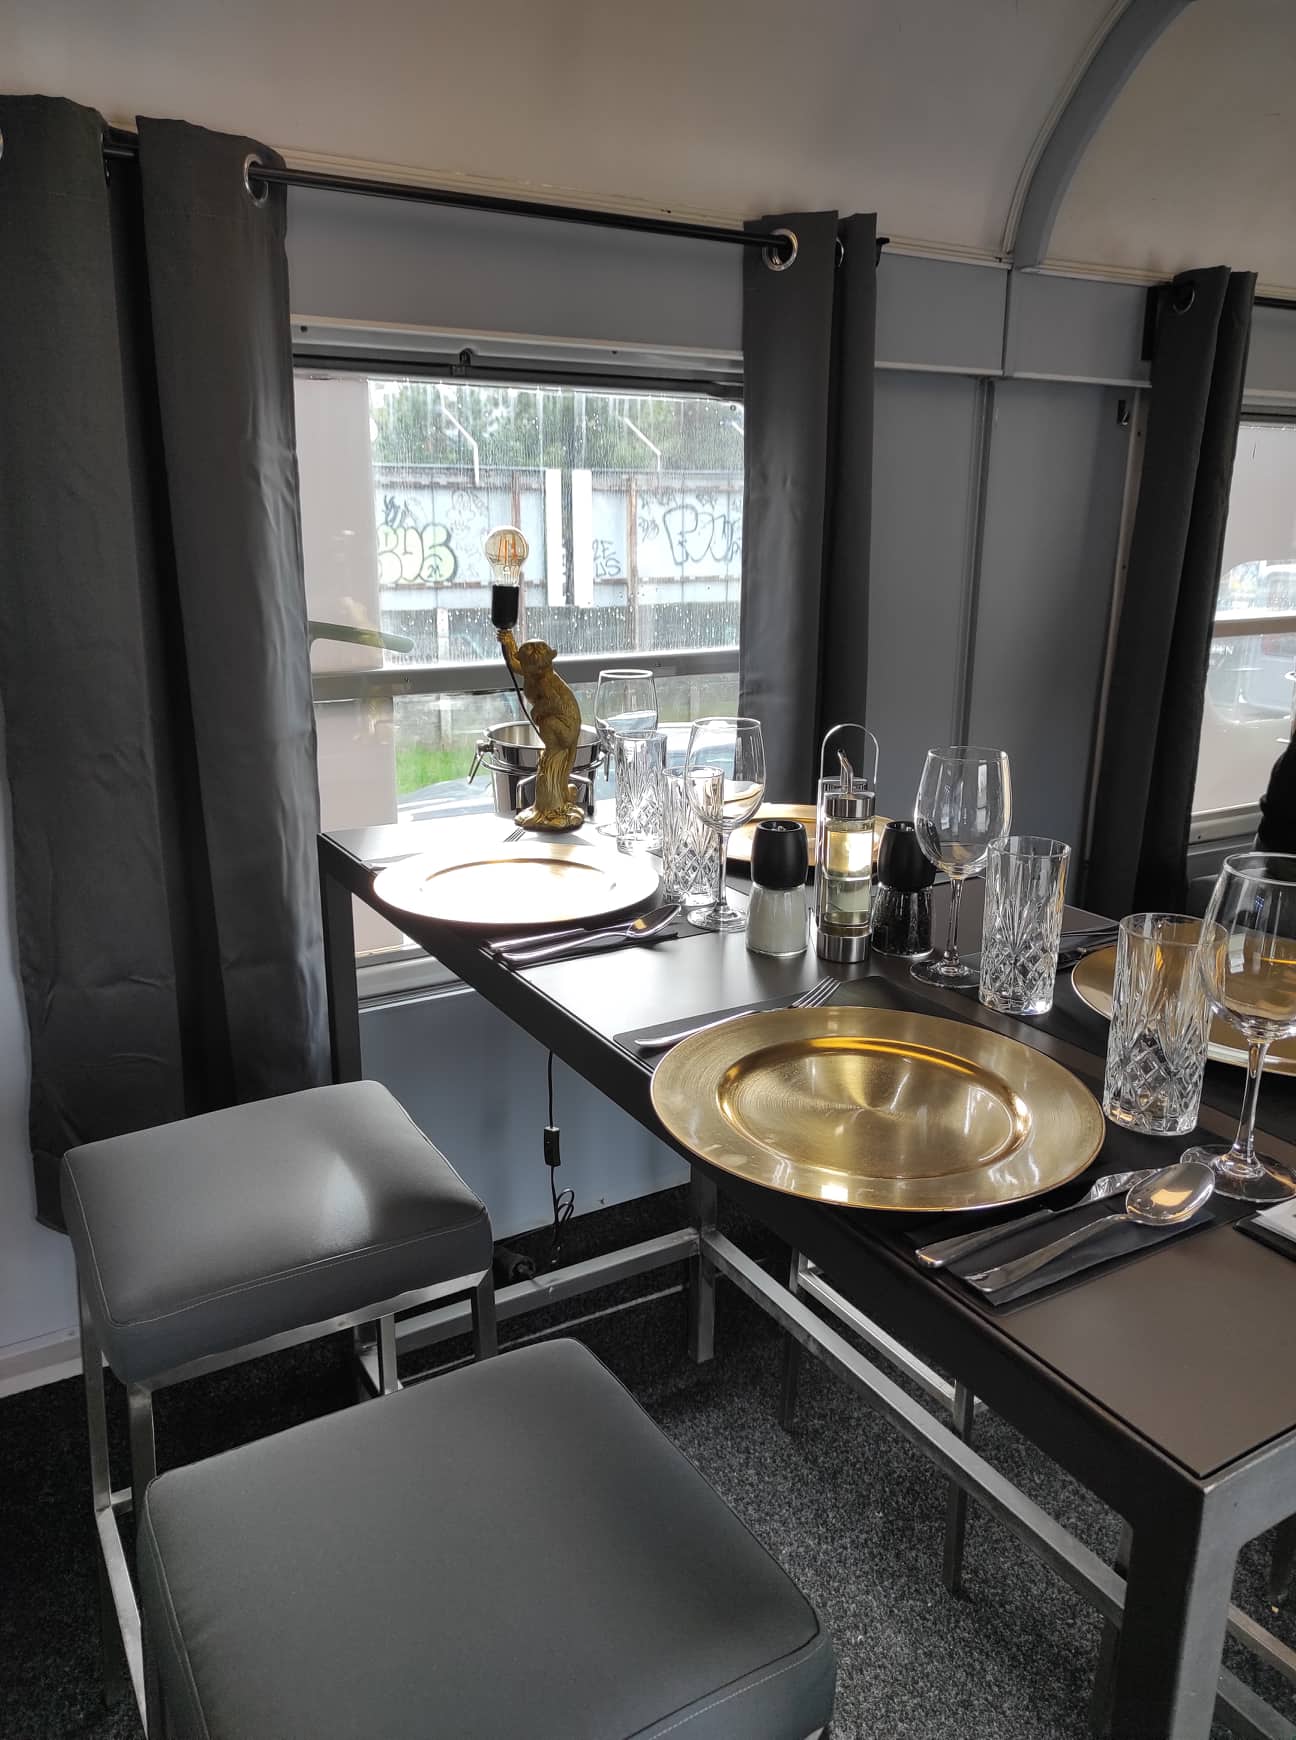 Extravagant experience: ručali smo u posebnom restoranu unutar vagona - Balkan Express Zagreb!